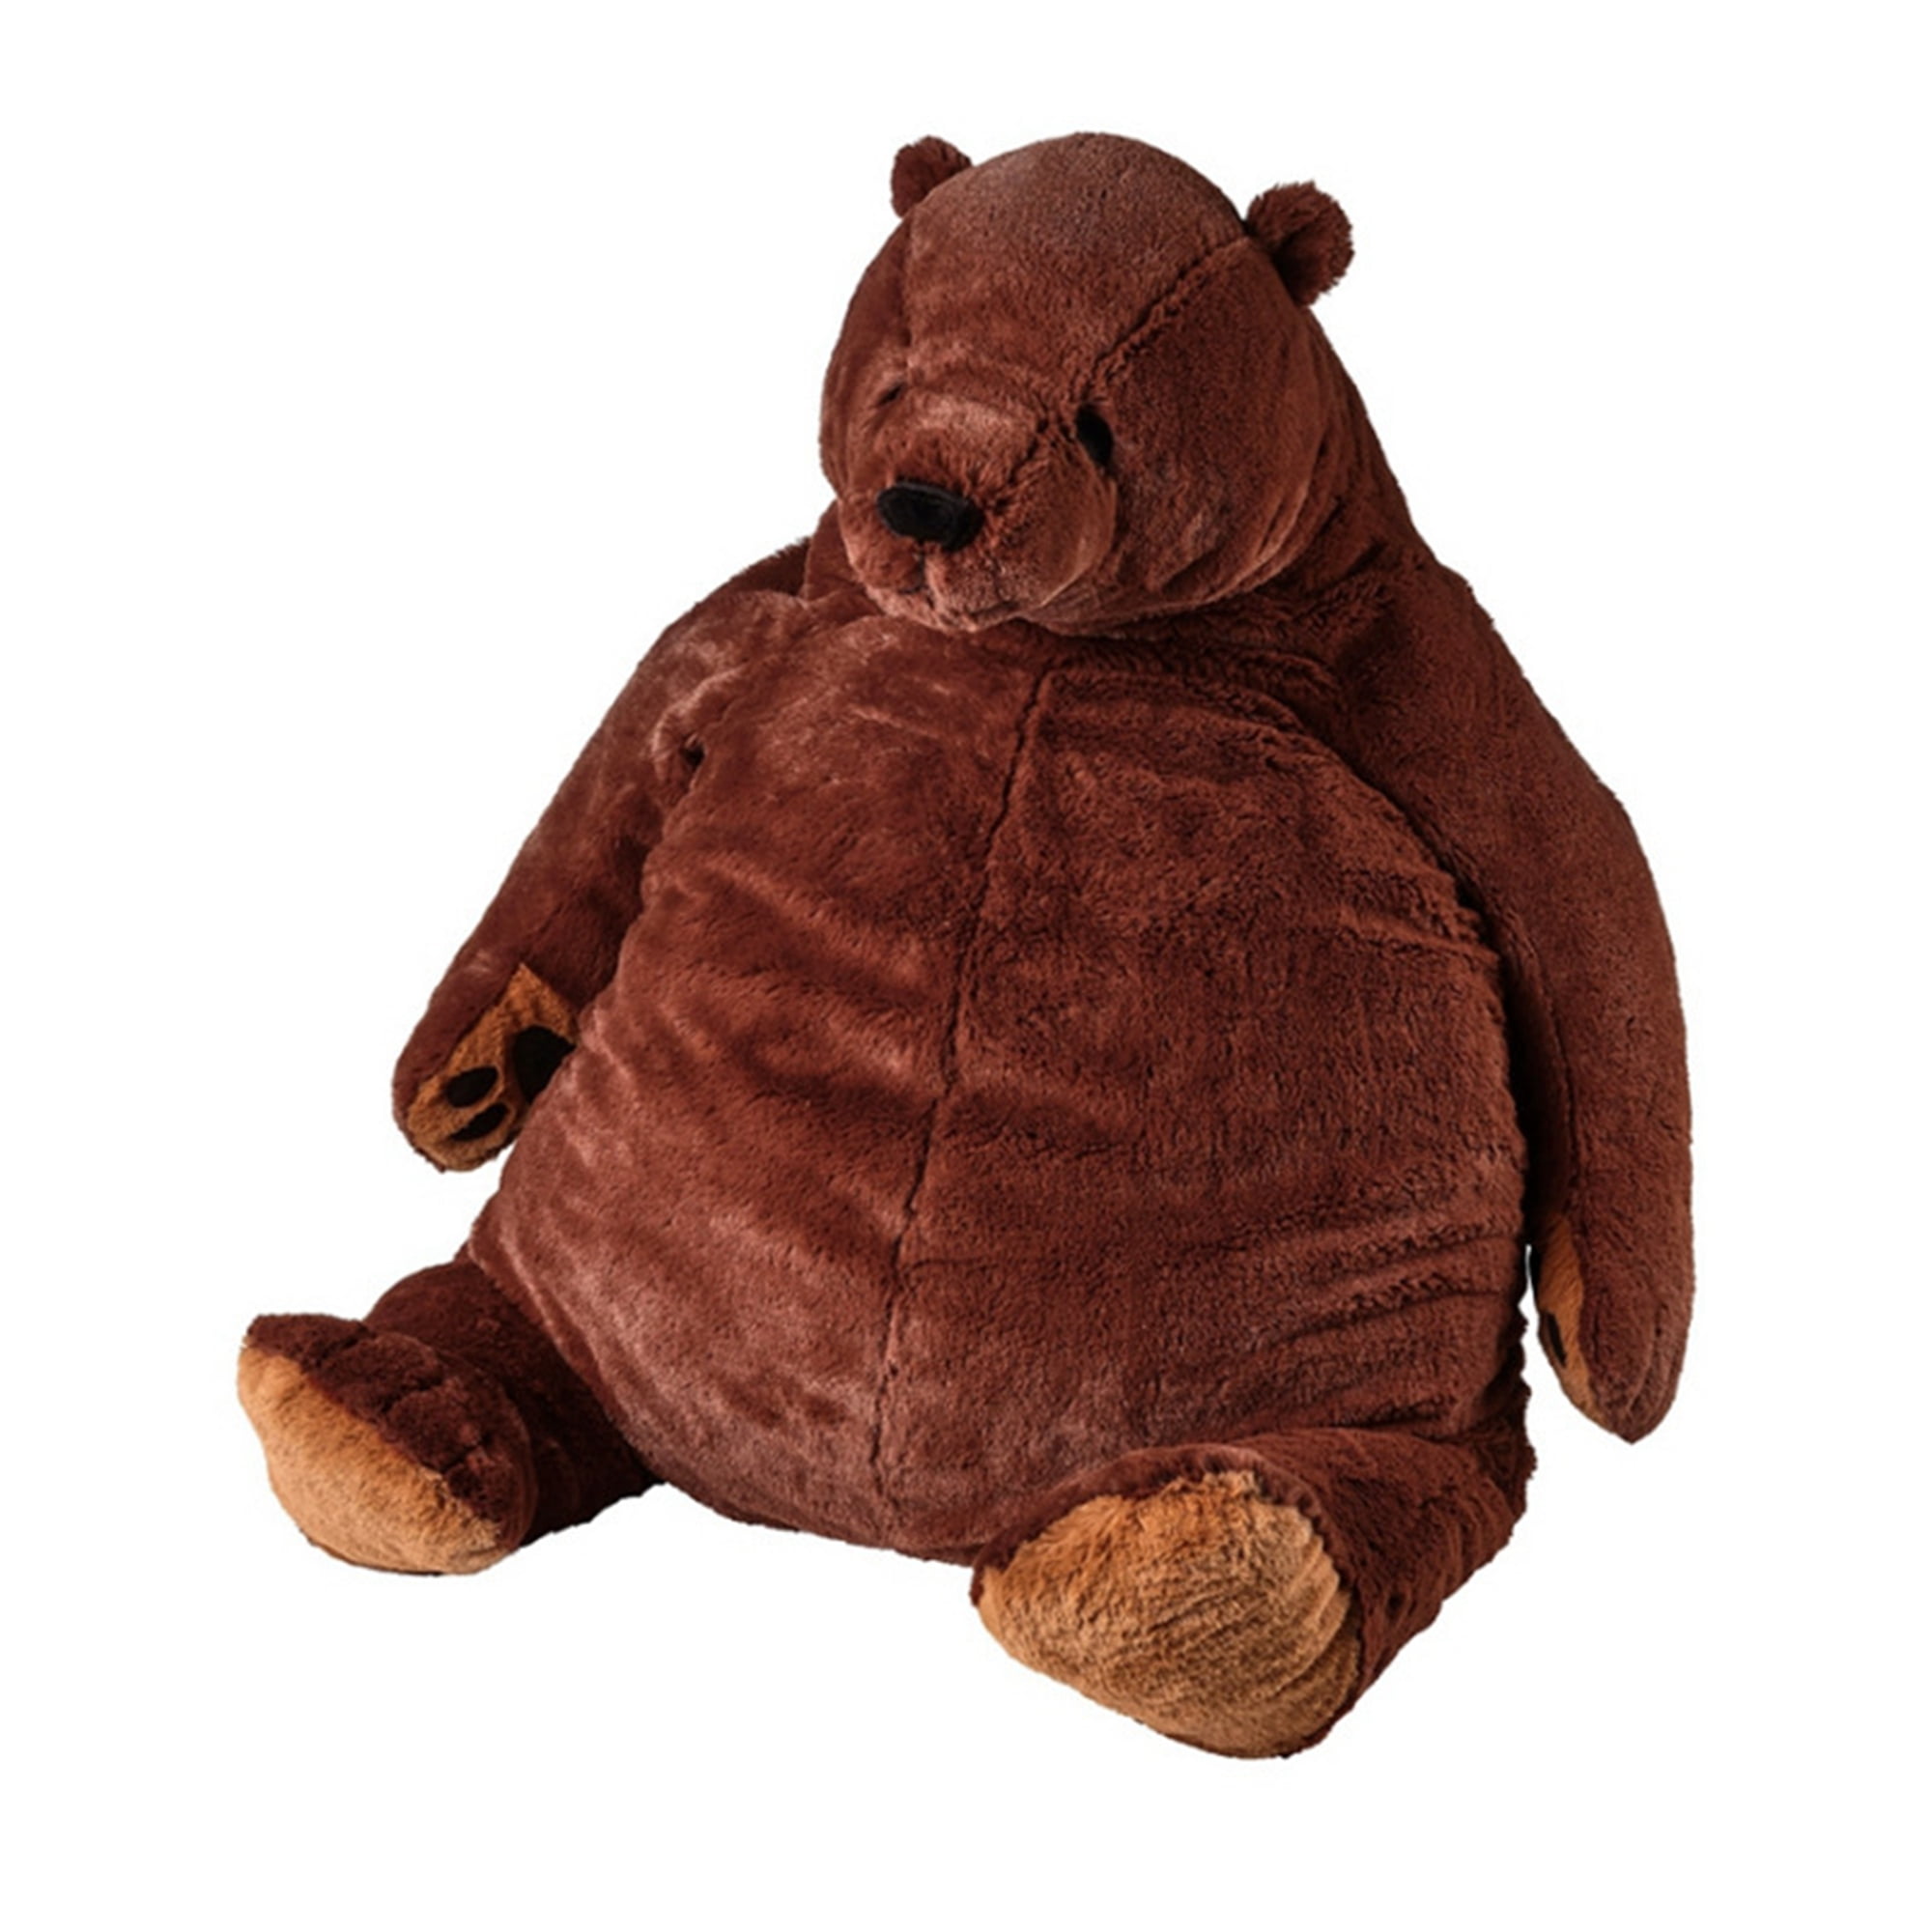 Big Teddy Bear Stuffed Soft love Plush Animal Toys Valentine Birthday Kids Gifts 